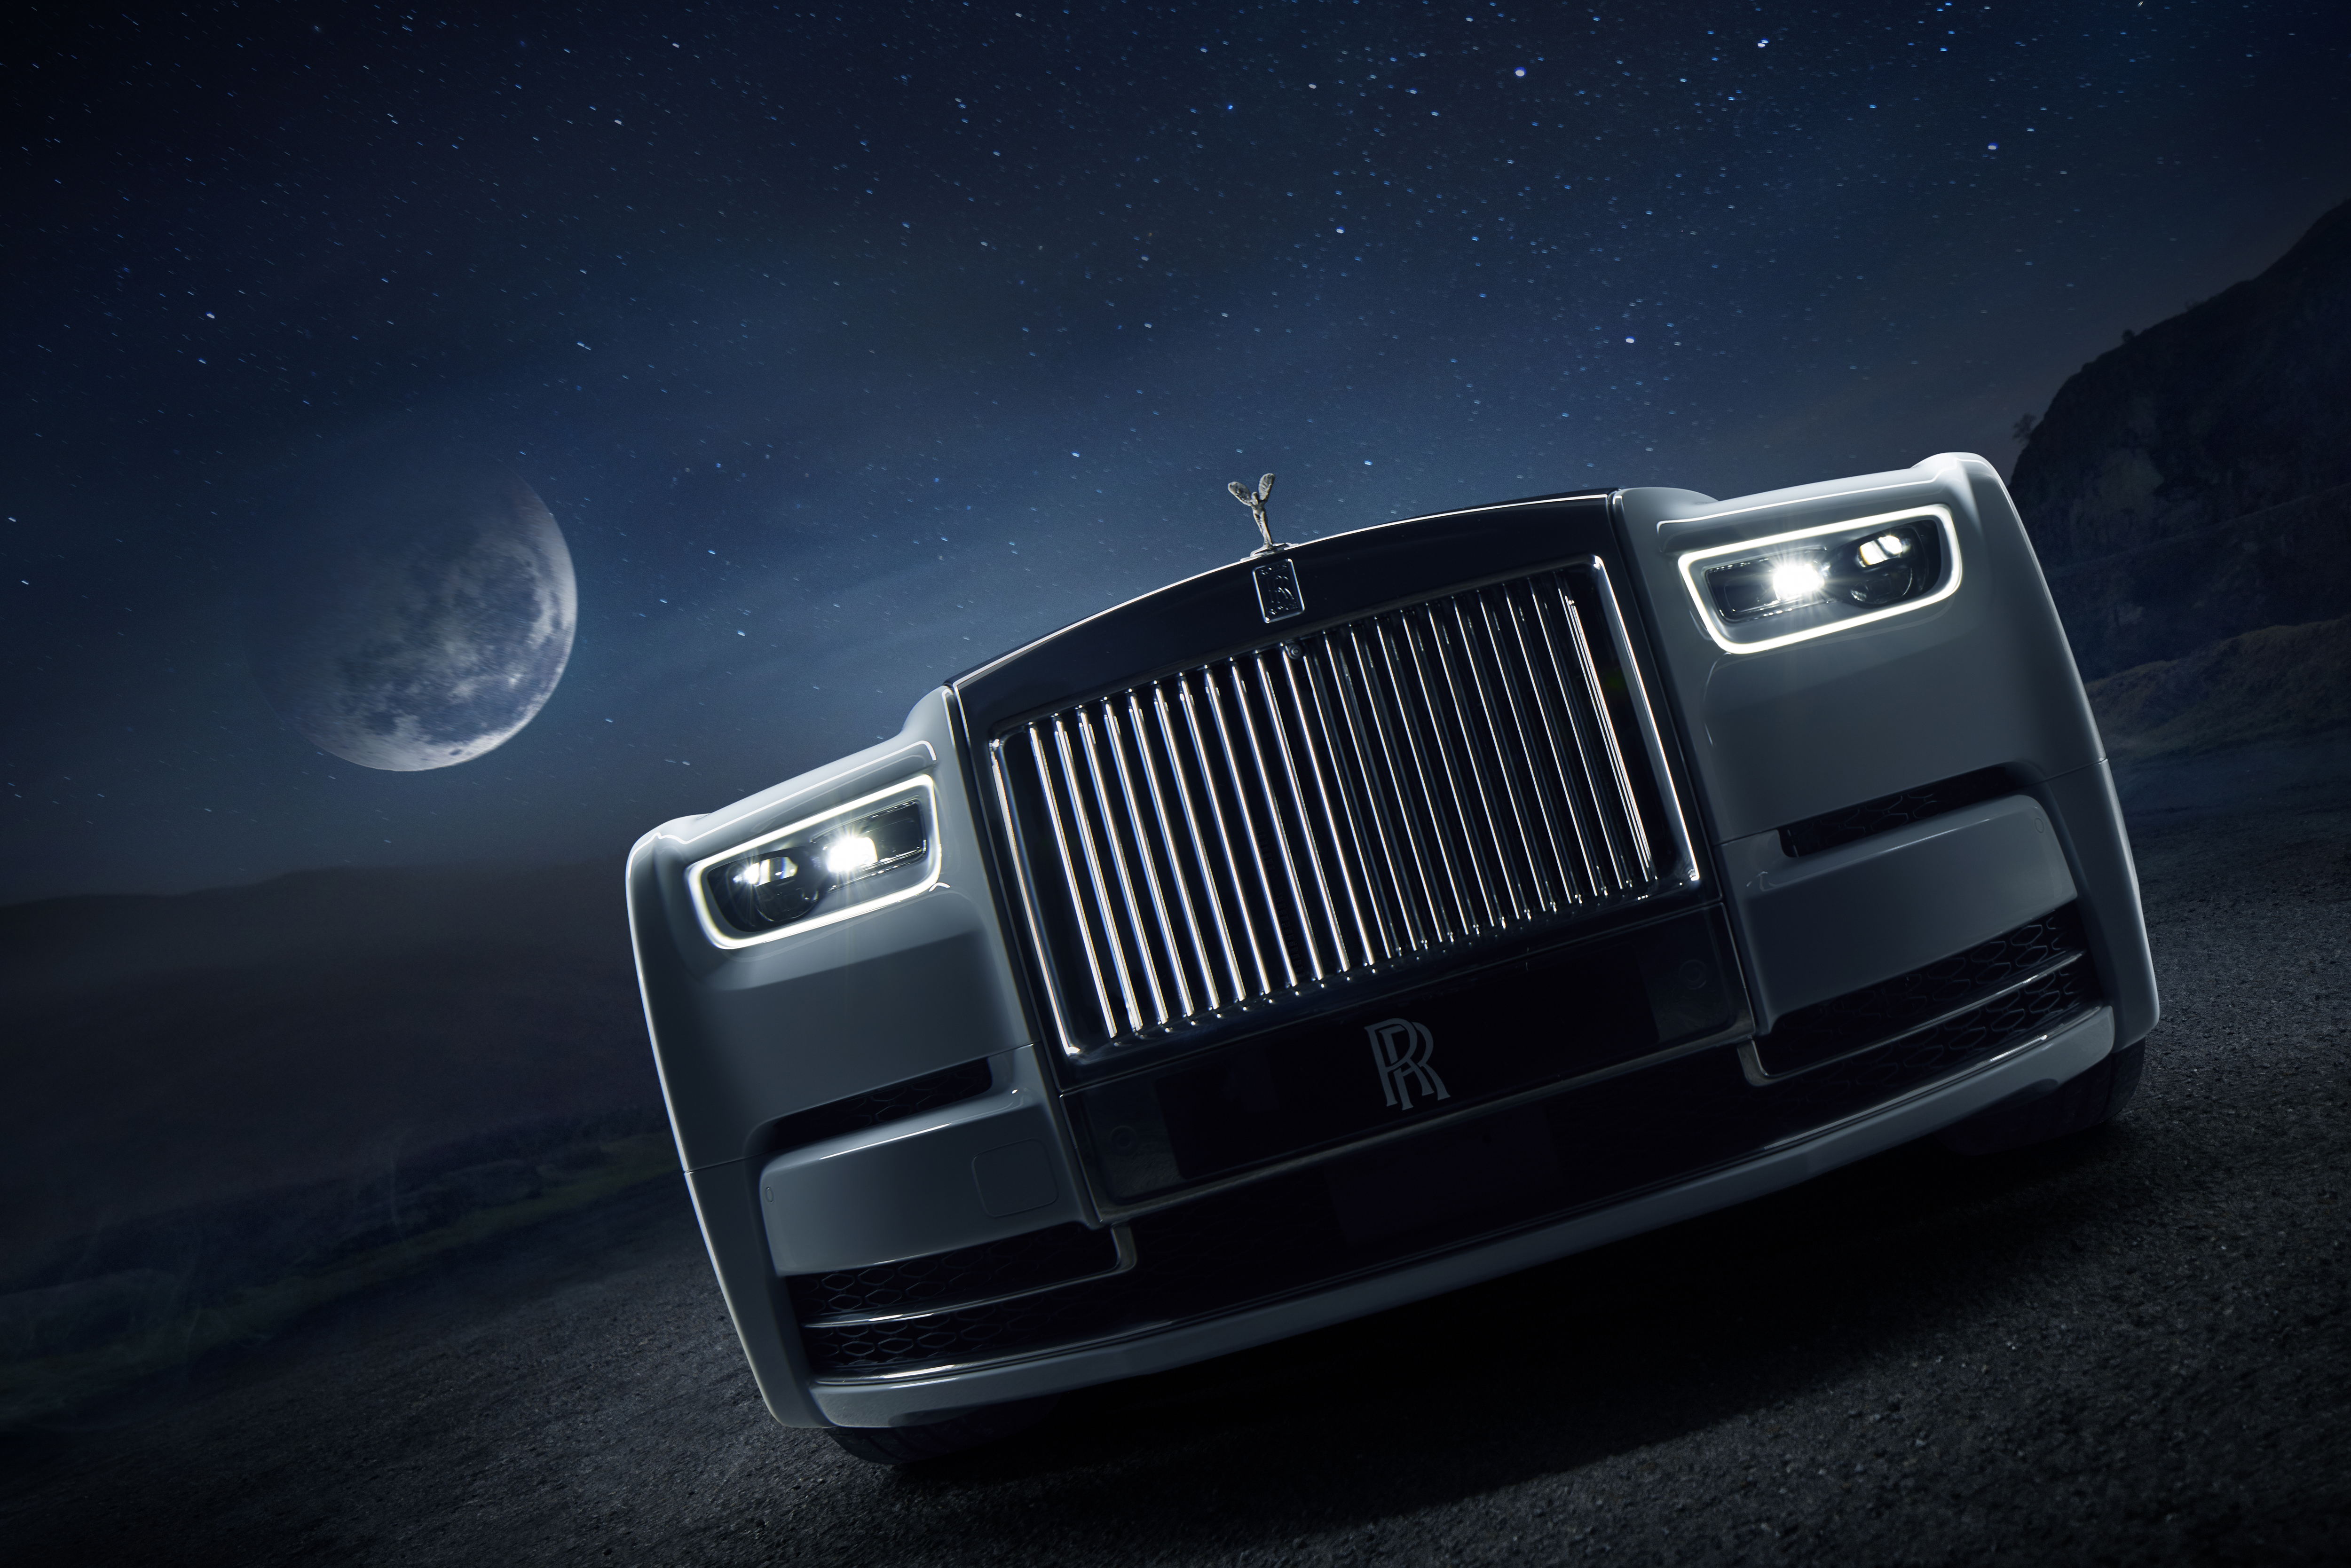 Rolls-Royce Phantom Wallpapers